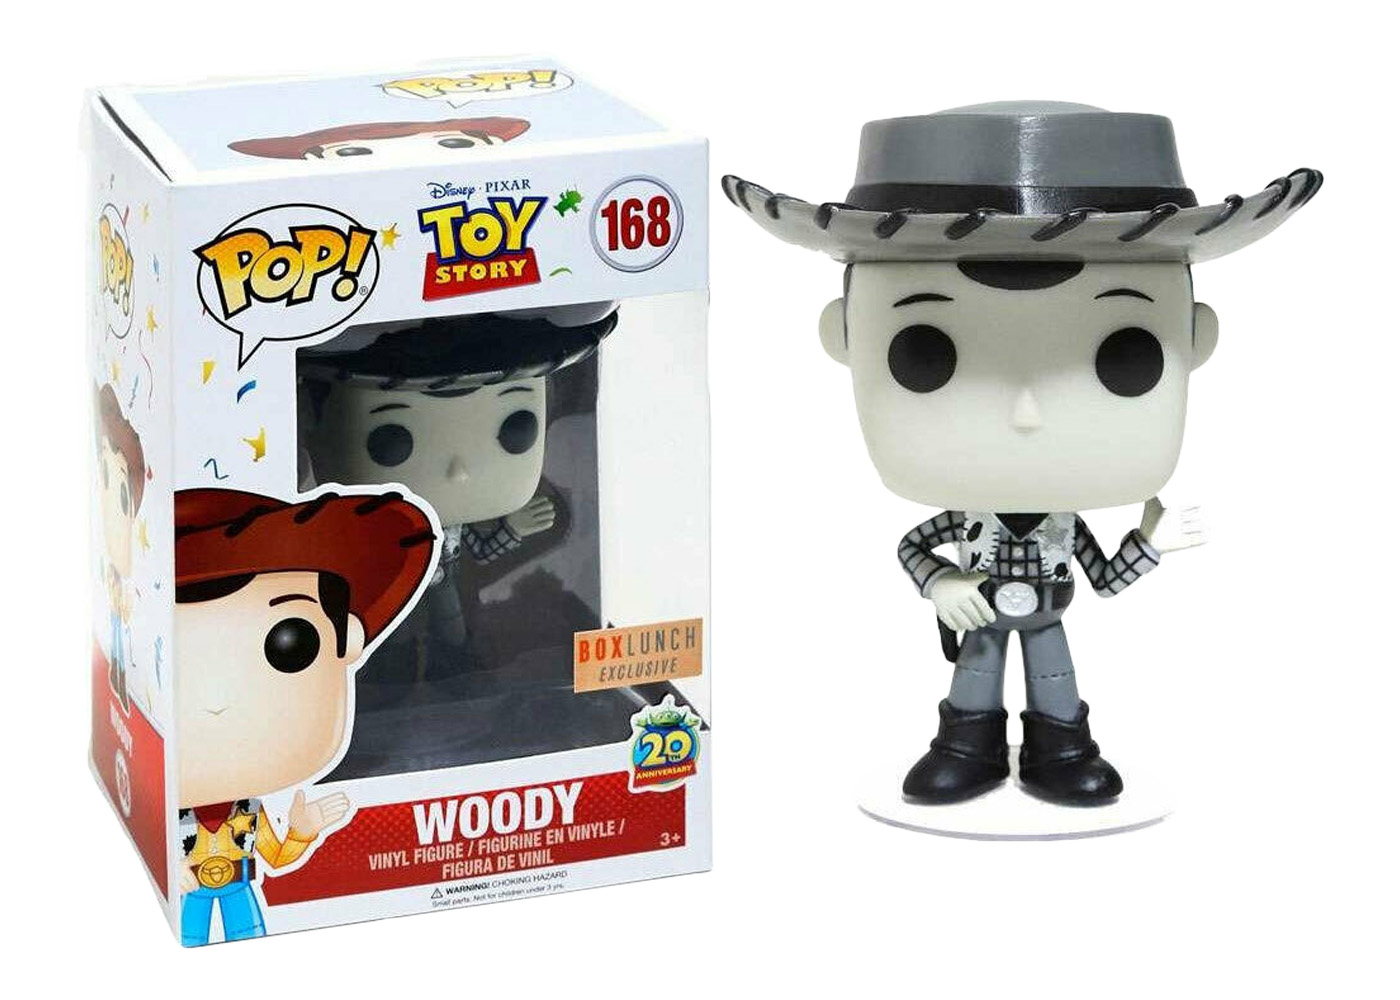 Vinyl--Toy Story Vinyl Woody Pop Pop 